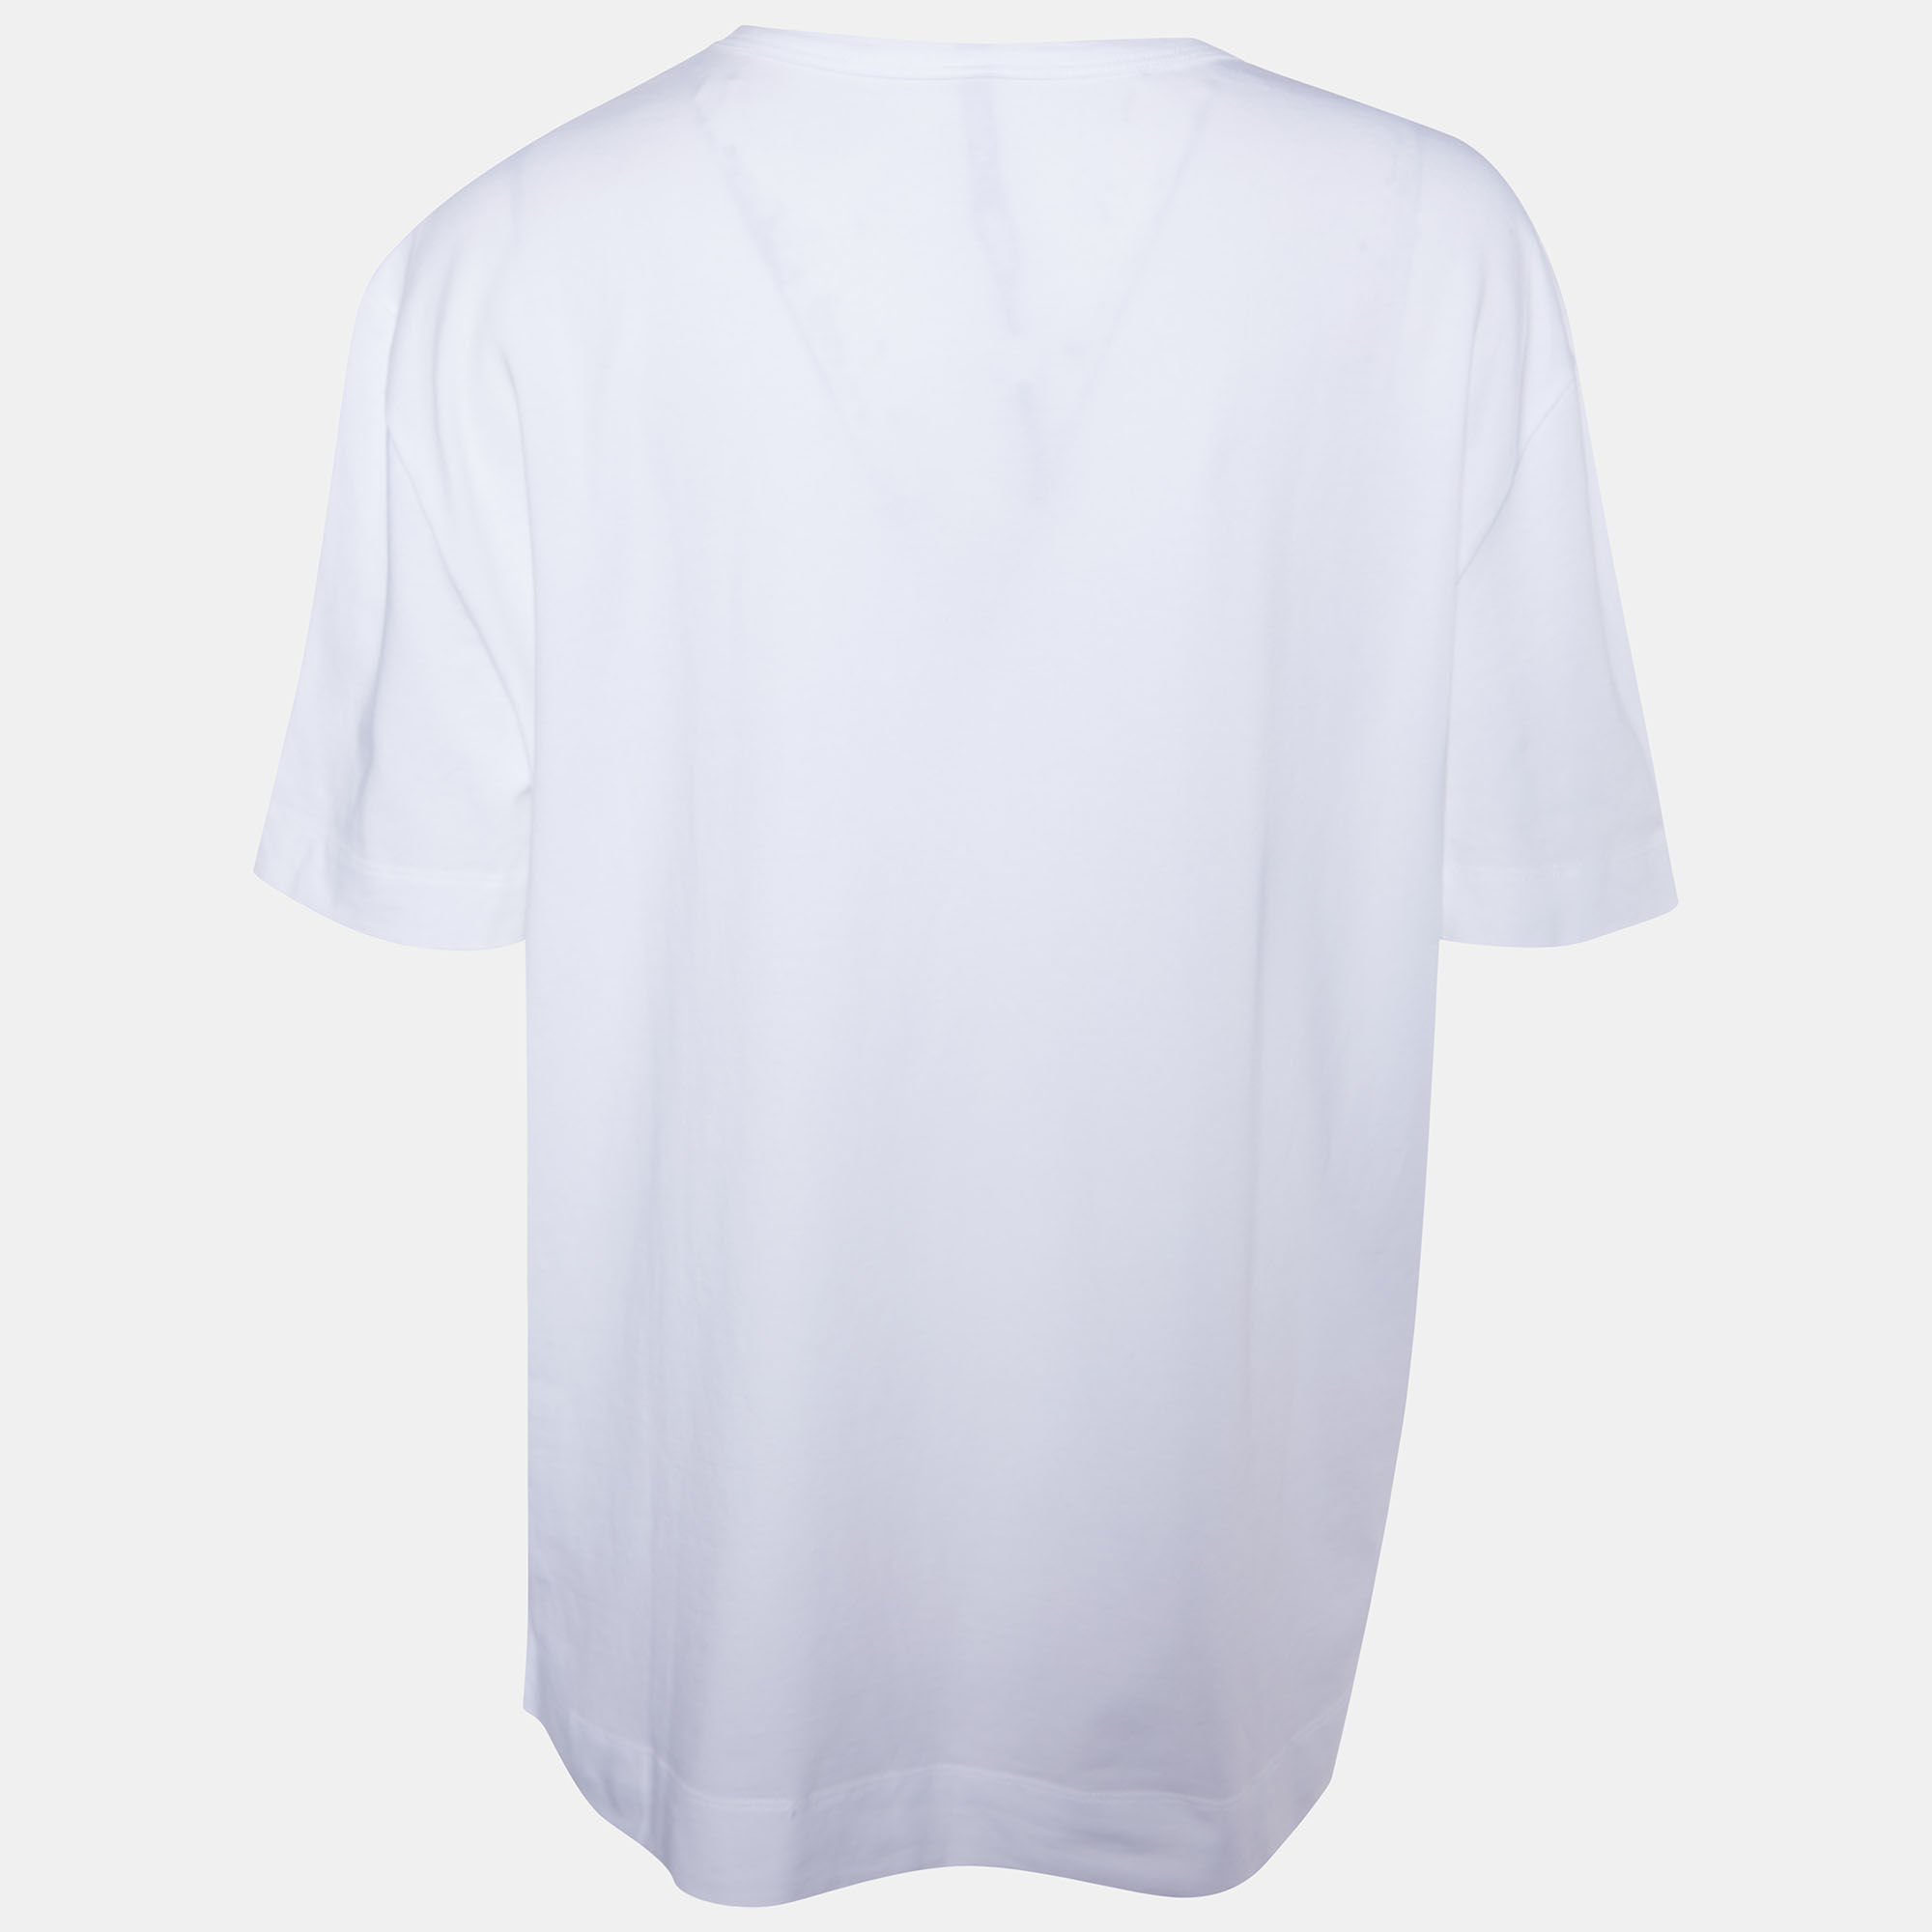 

Versus Versace White Lion Head Printed Cotton Knit T-Shirt